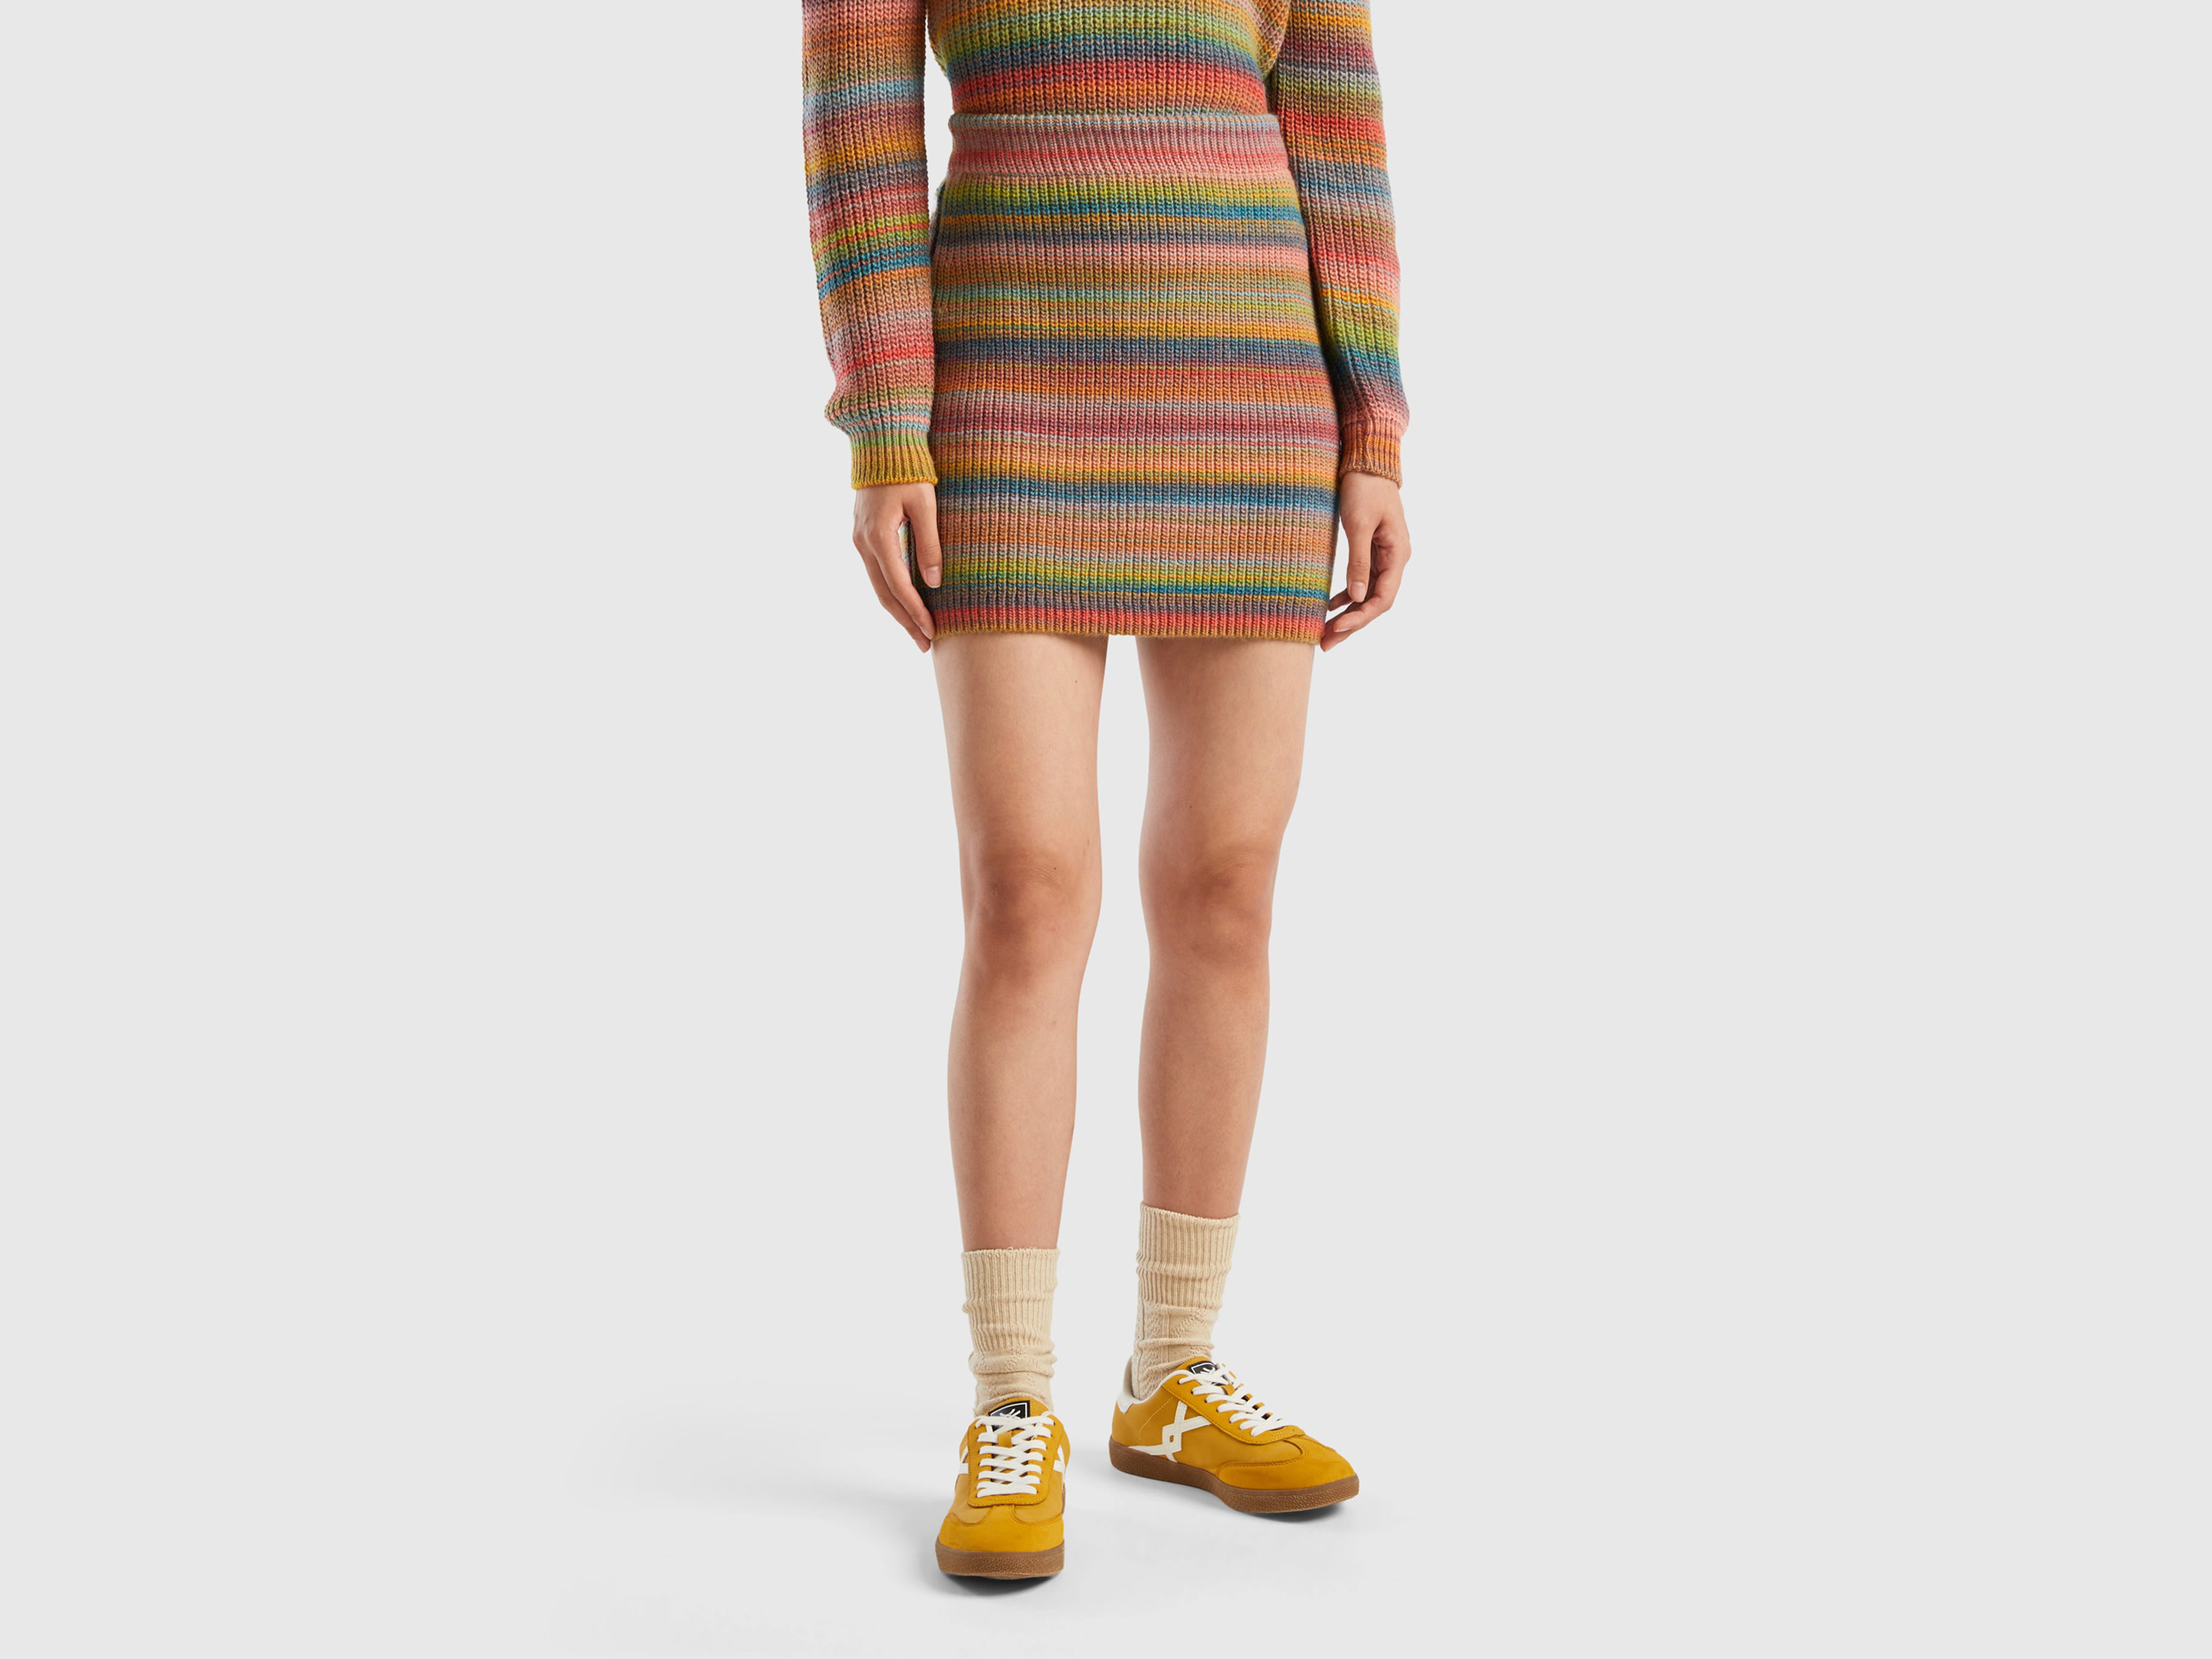 Benetton, Striped Knit Mini Skirt, size L, Multi-color, Women